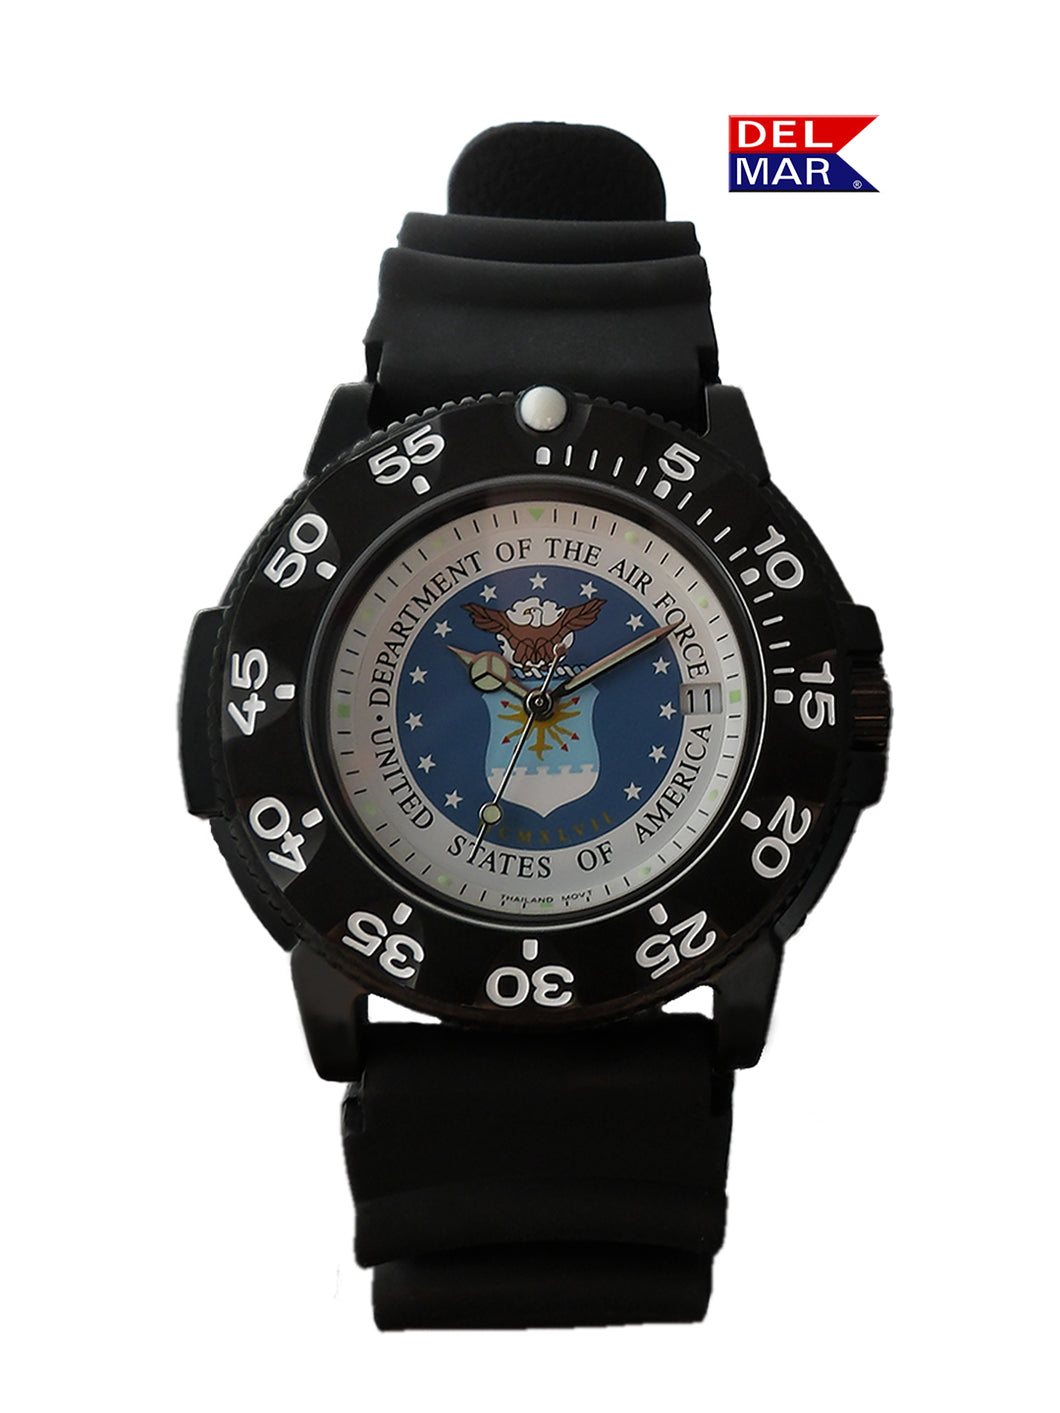  Del Mar Men's U.S. Air Force Military Watch - Black Strap #50520